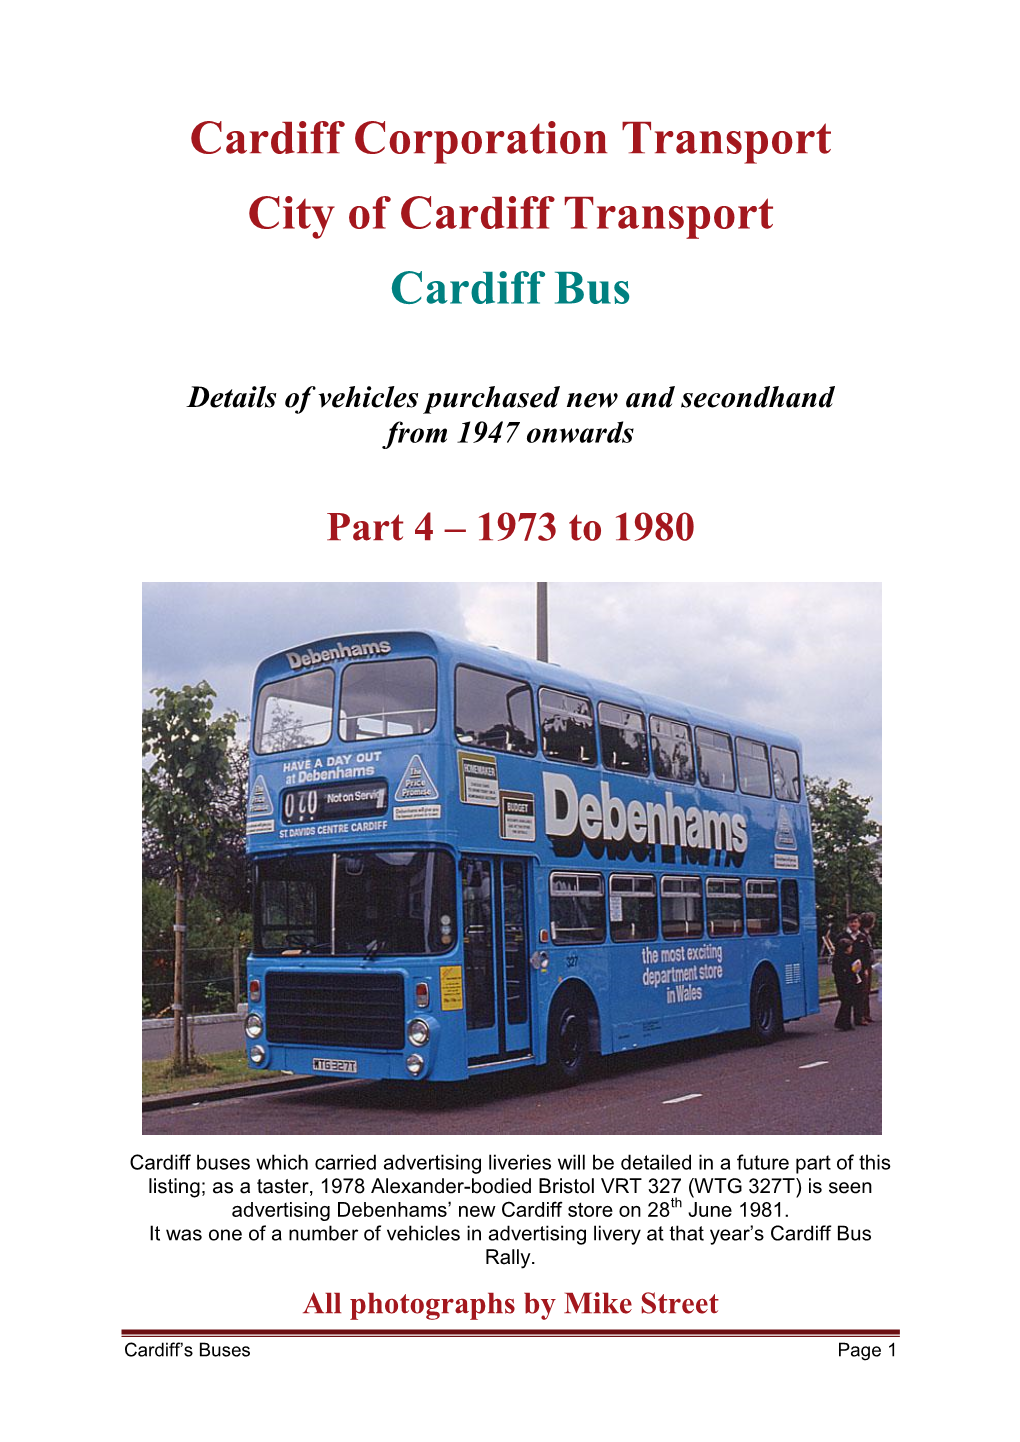 Cardiff Corporation Transport City of Cardiff Transport Cardiff Bus